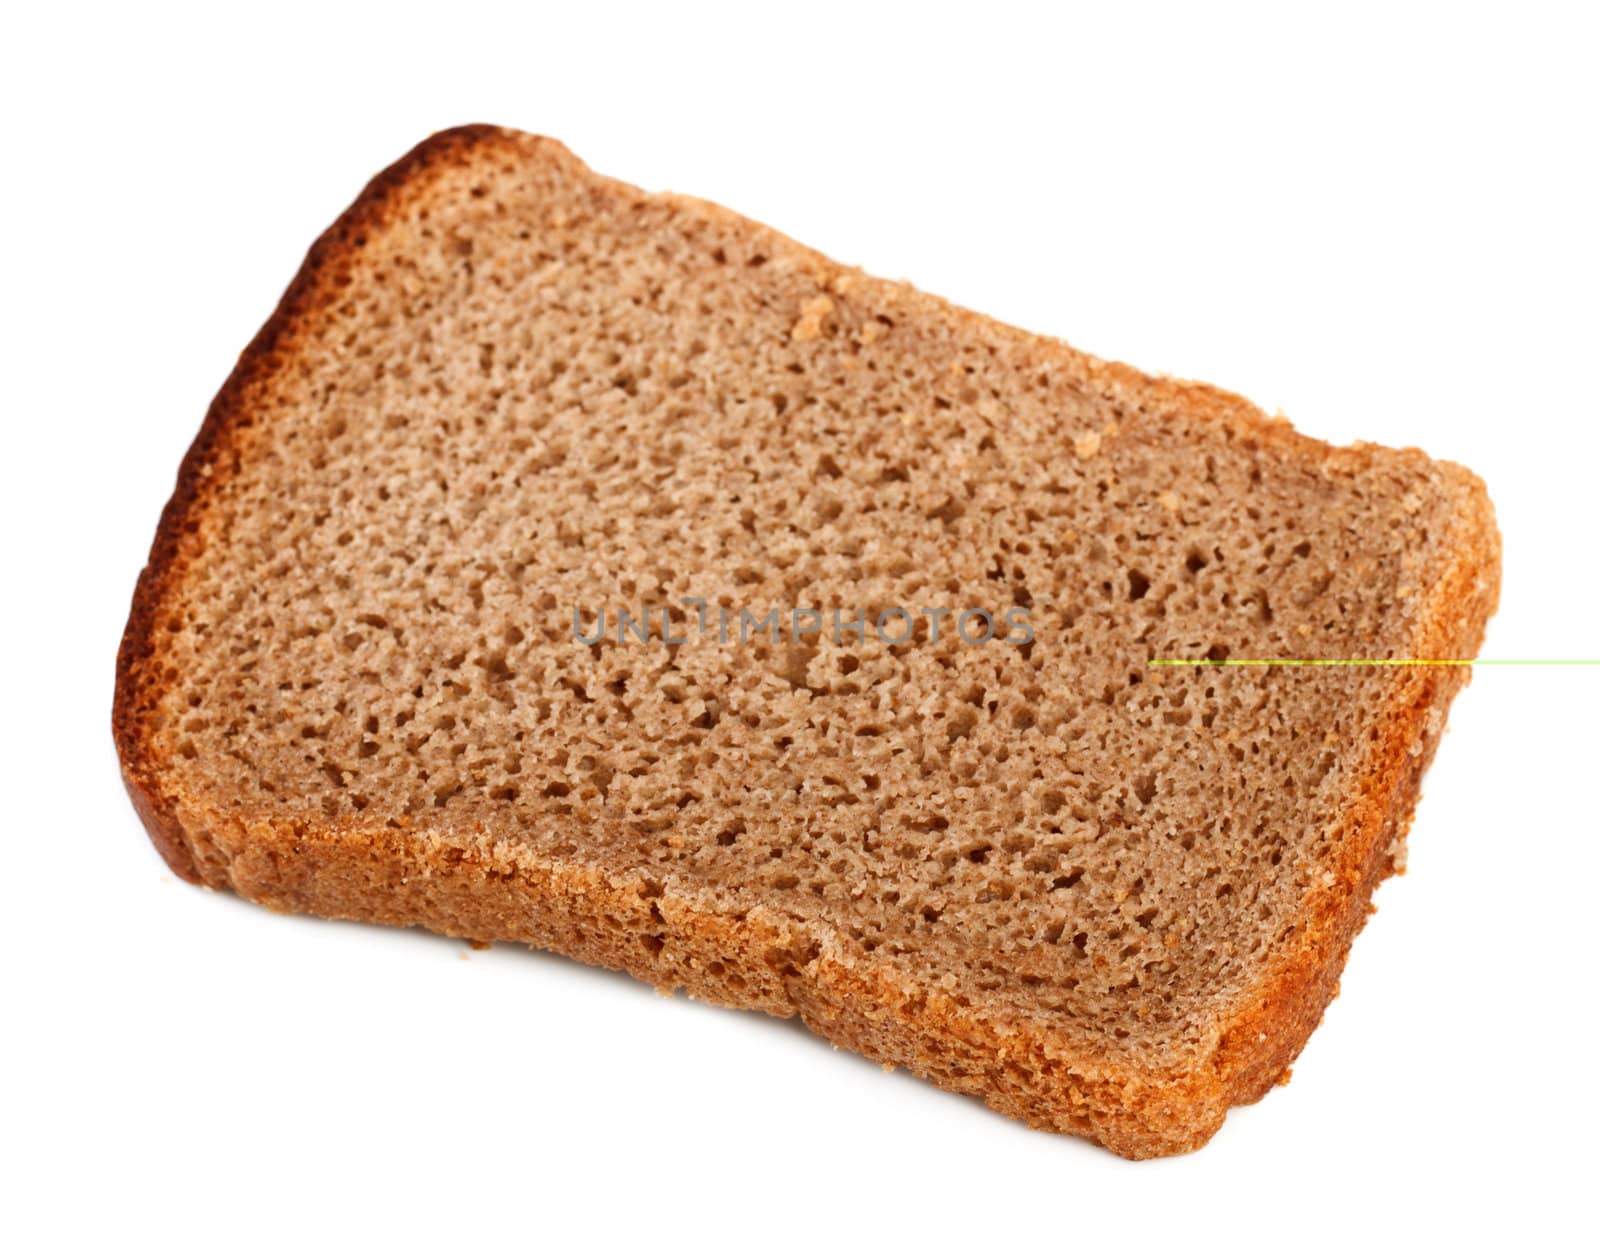 Rye Bread Slice by petr_malyshev